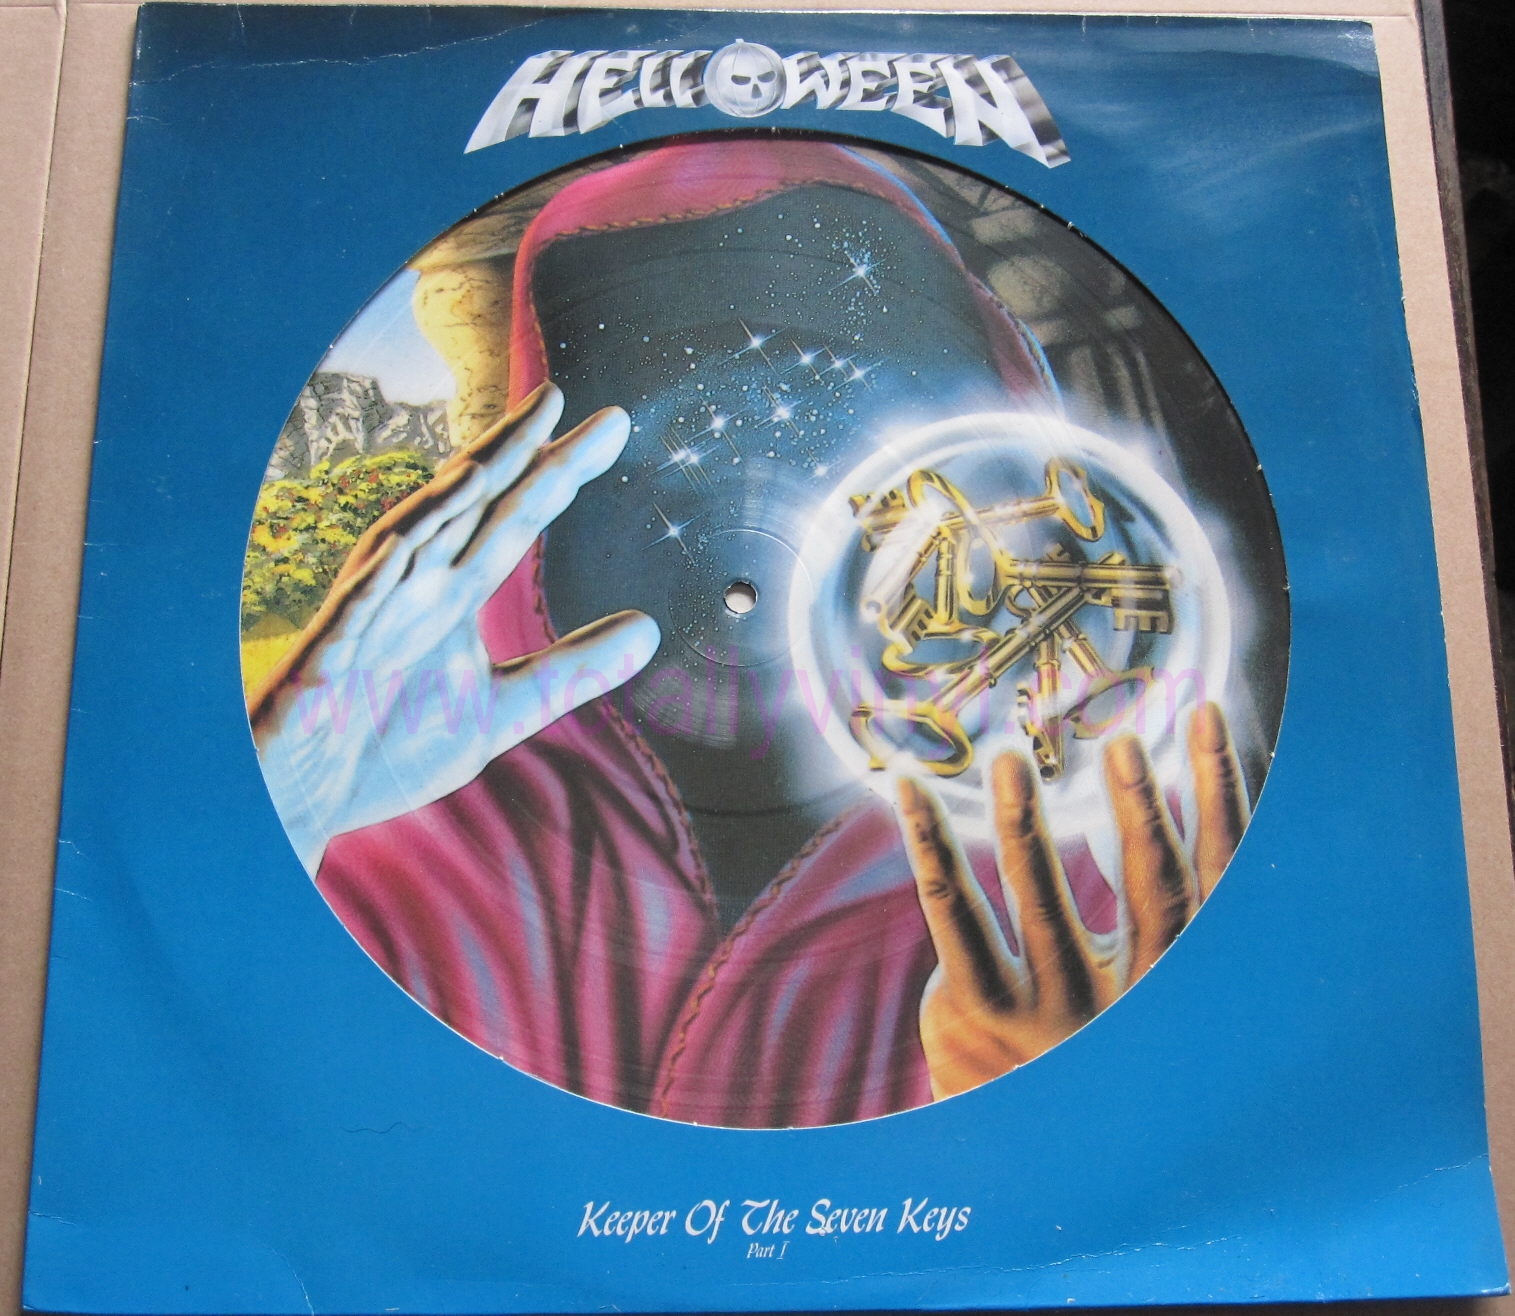 Totally Vinyl Records || Helloween - Keeper of the seven keys part 